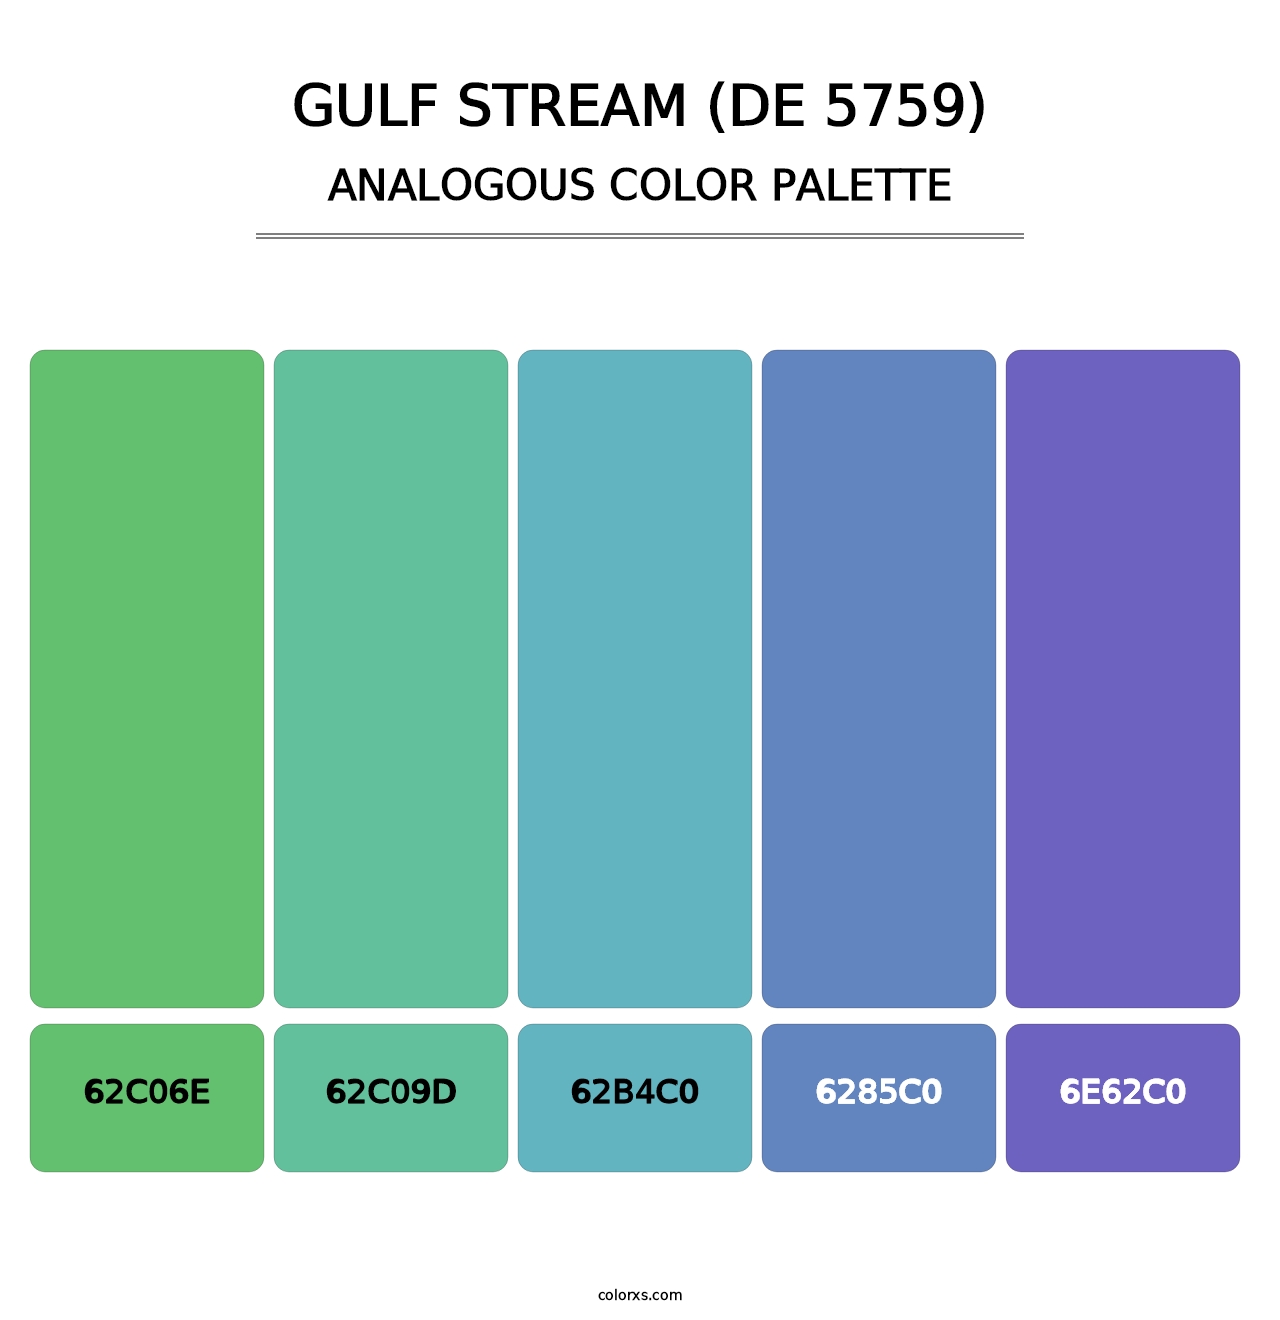 Gulf Stream (DE 5759) - Analogous Color Palette